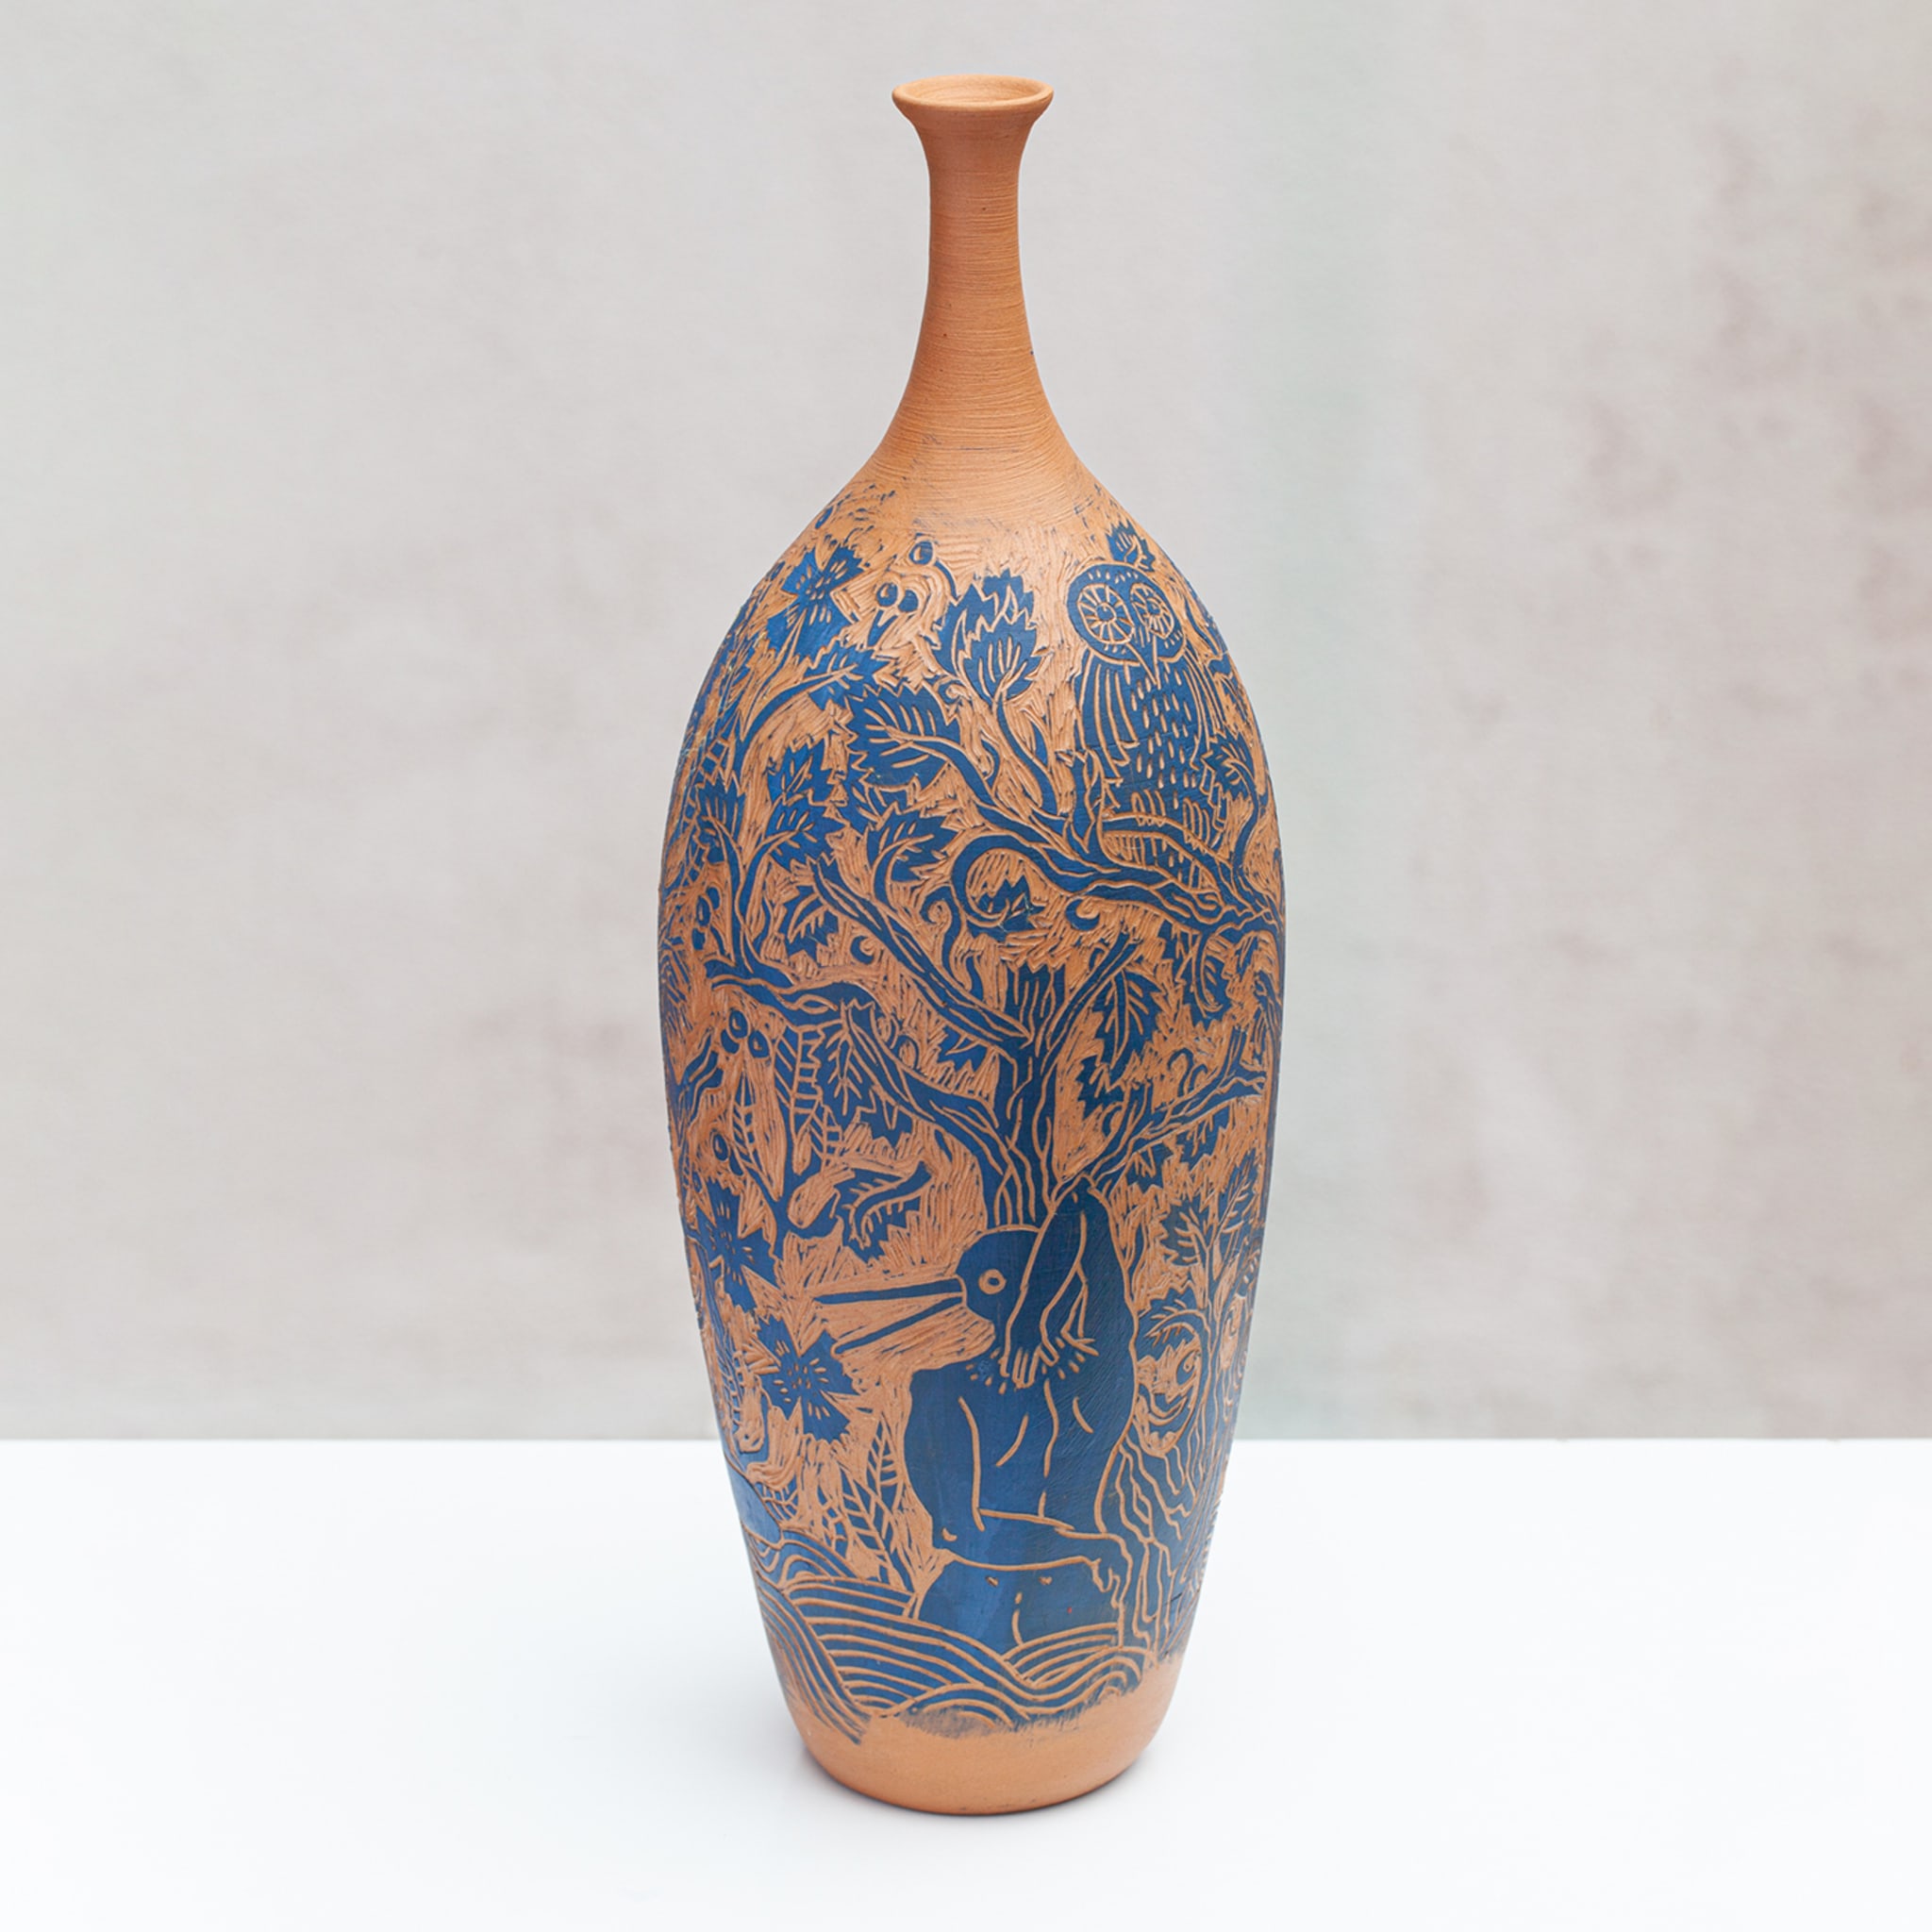 Aironi Heron Vase by Clara Holt and Chiara Zoppei - Alternative view 2